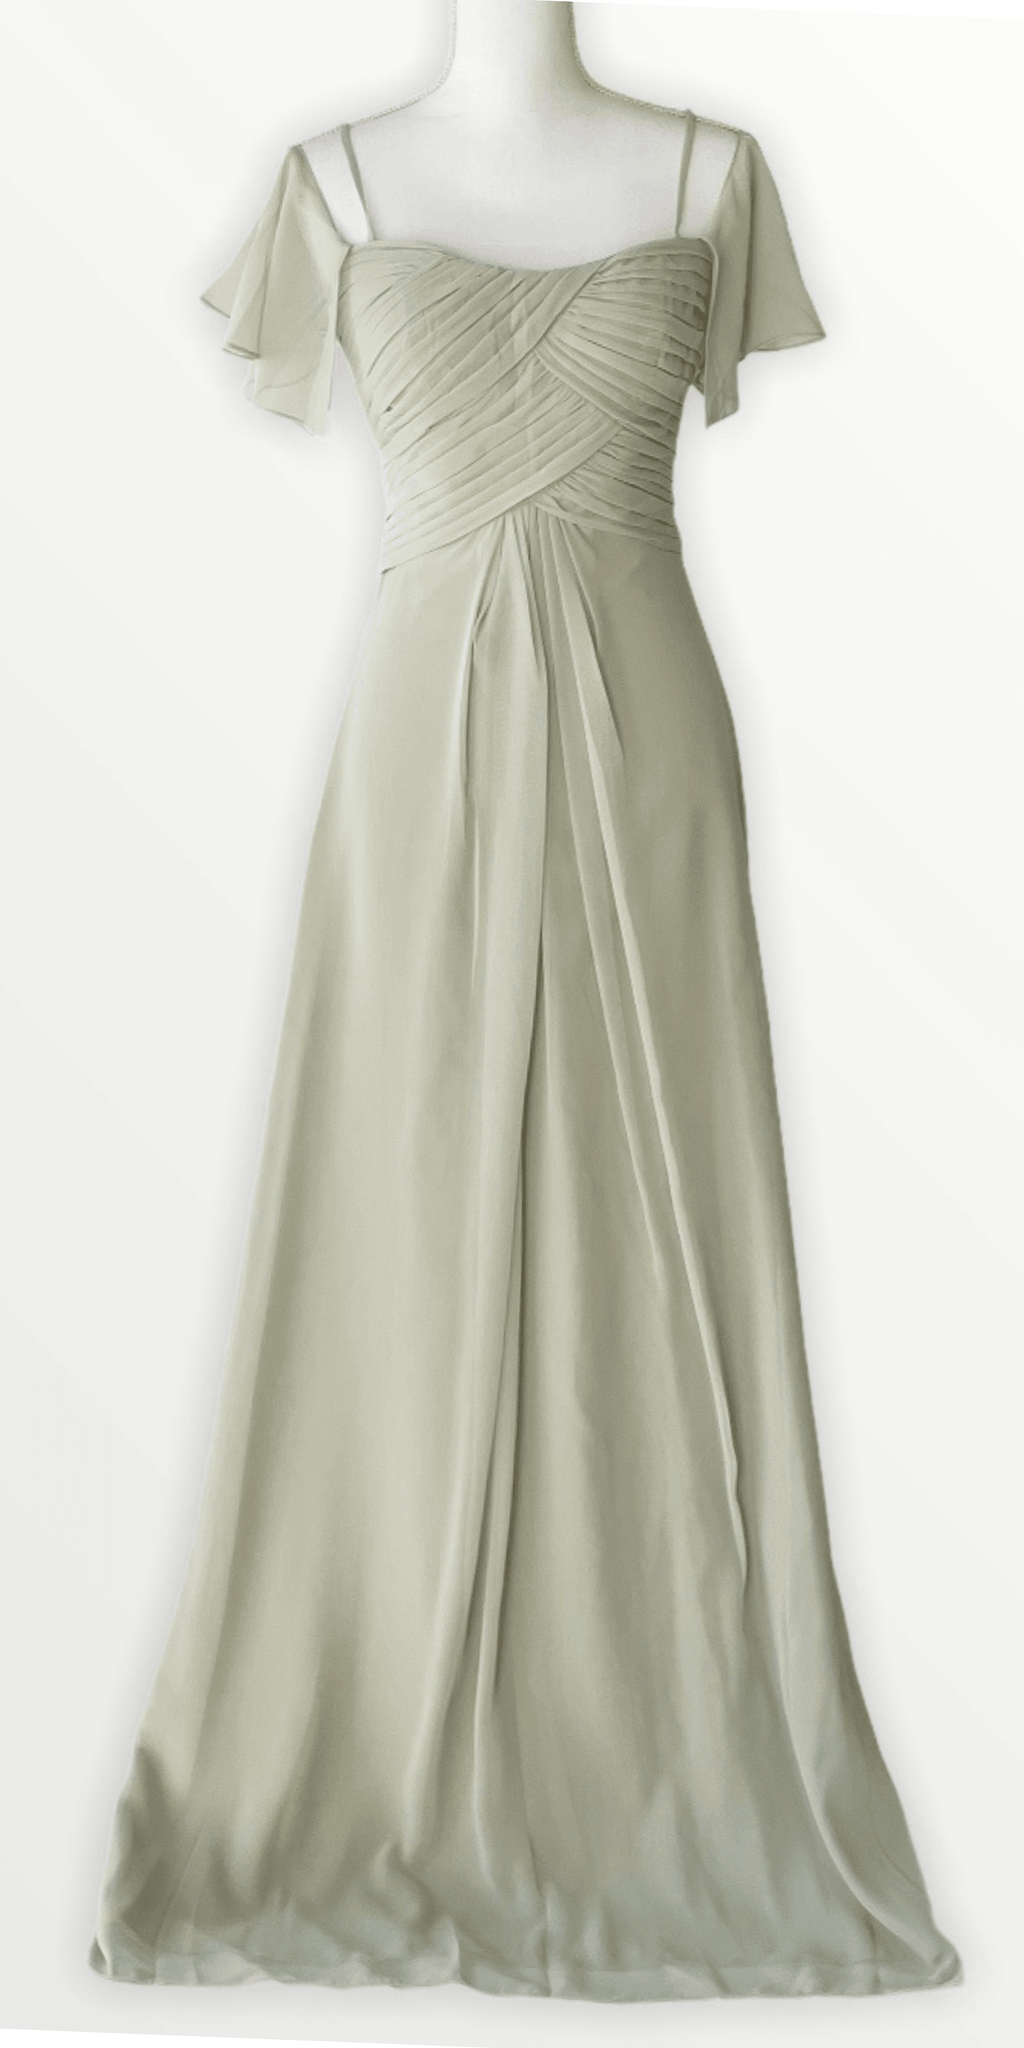 Leo Bridesmaid Dress - Simply Borrowed Dresses